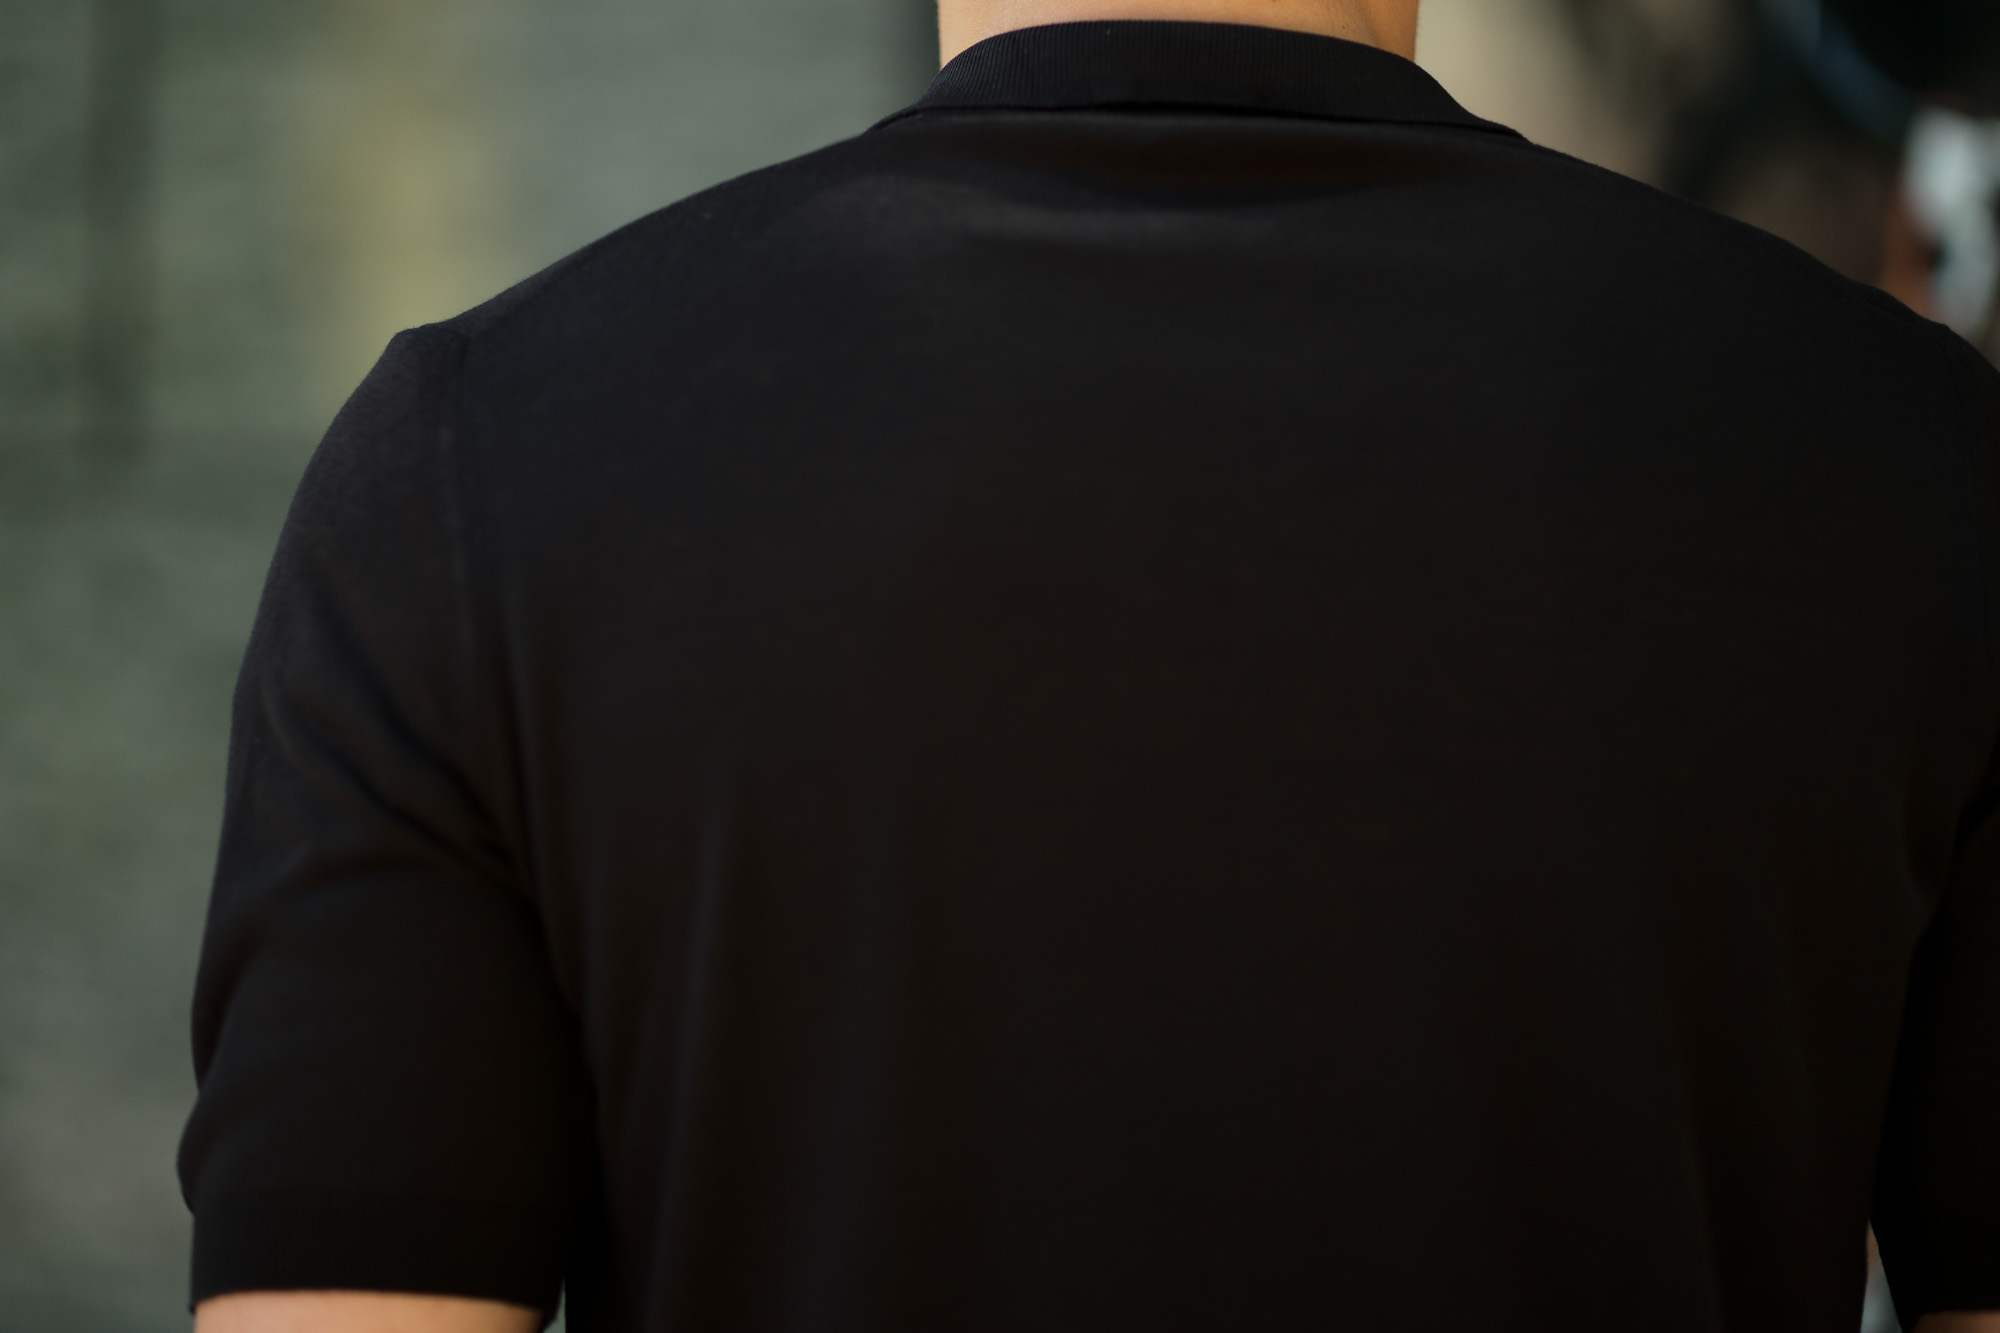 Gran Sasso (グランサッソ) Silk Knit Polo Shirt (シルクニット) SETA (シルク 100%) シルク ニット ポロシャツ BLACK (ブラック・099) made in italy (イタリア製) 2019 春夏新作 gransasso 愛知 名古屋 altoediritto アルトエデリット